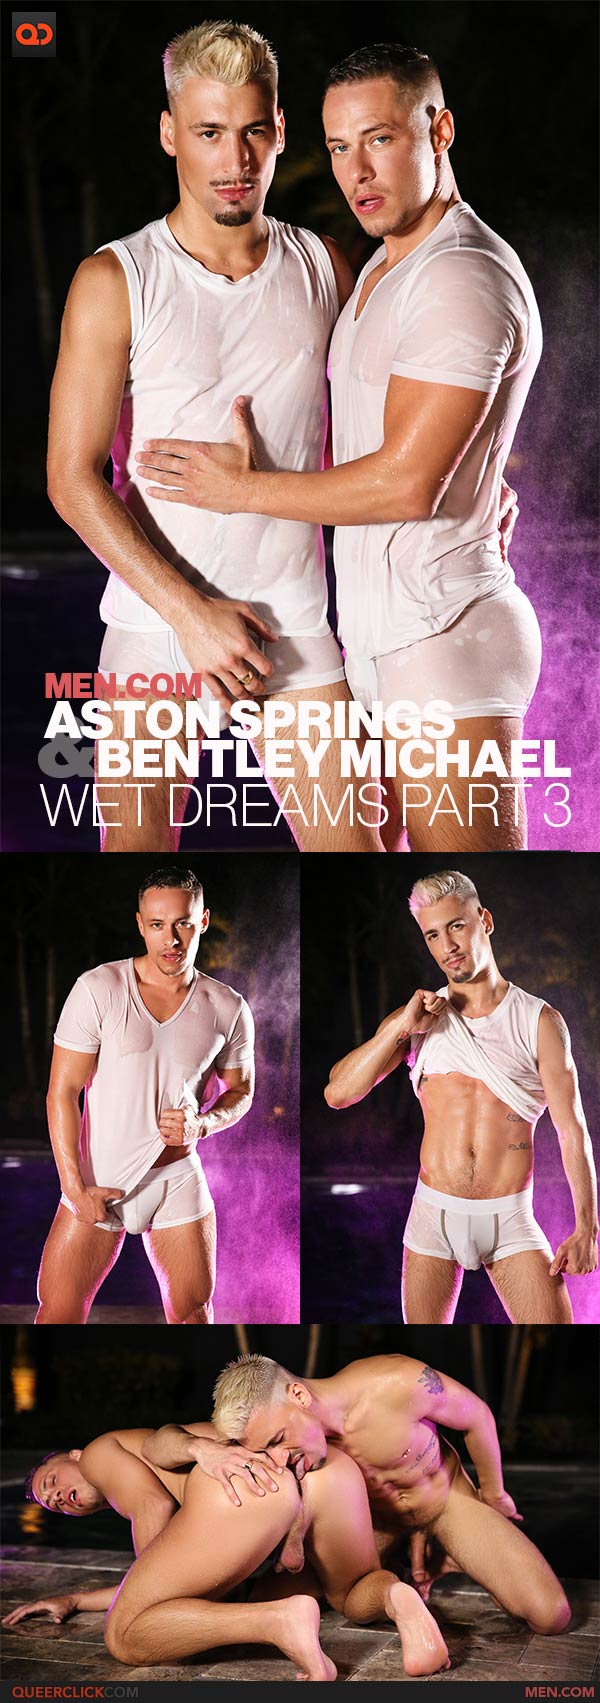 Men.com: Aston Springs and Bentley Michael